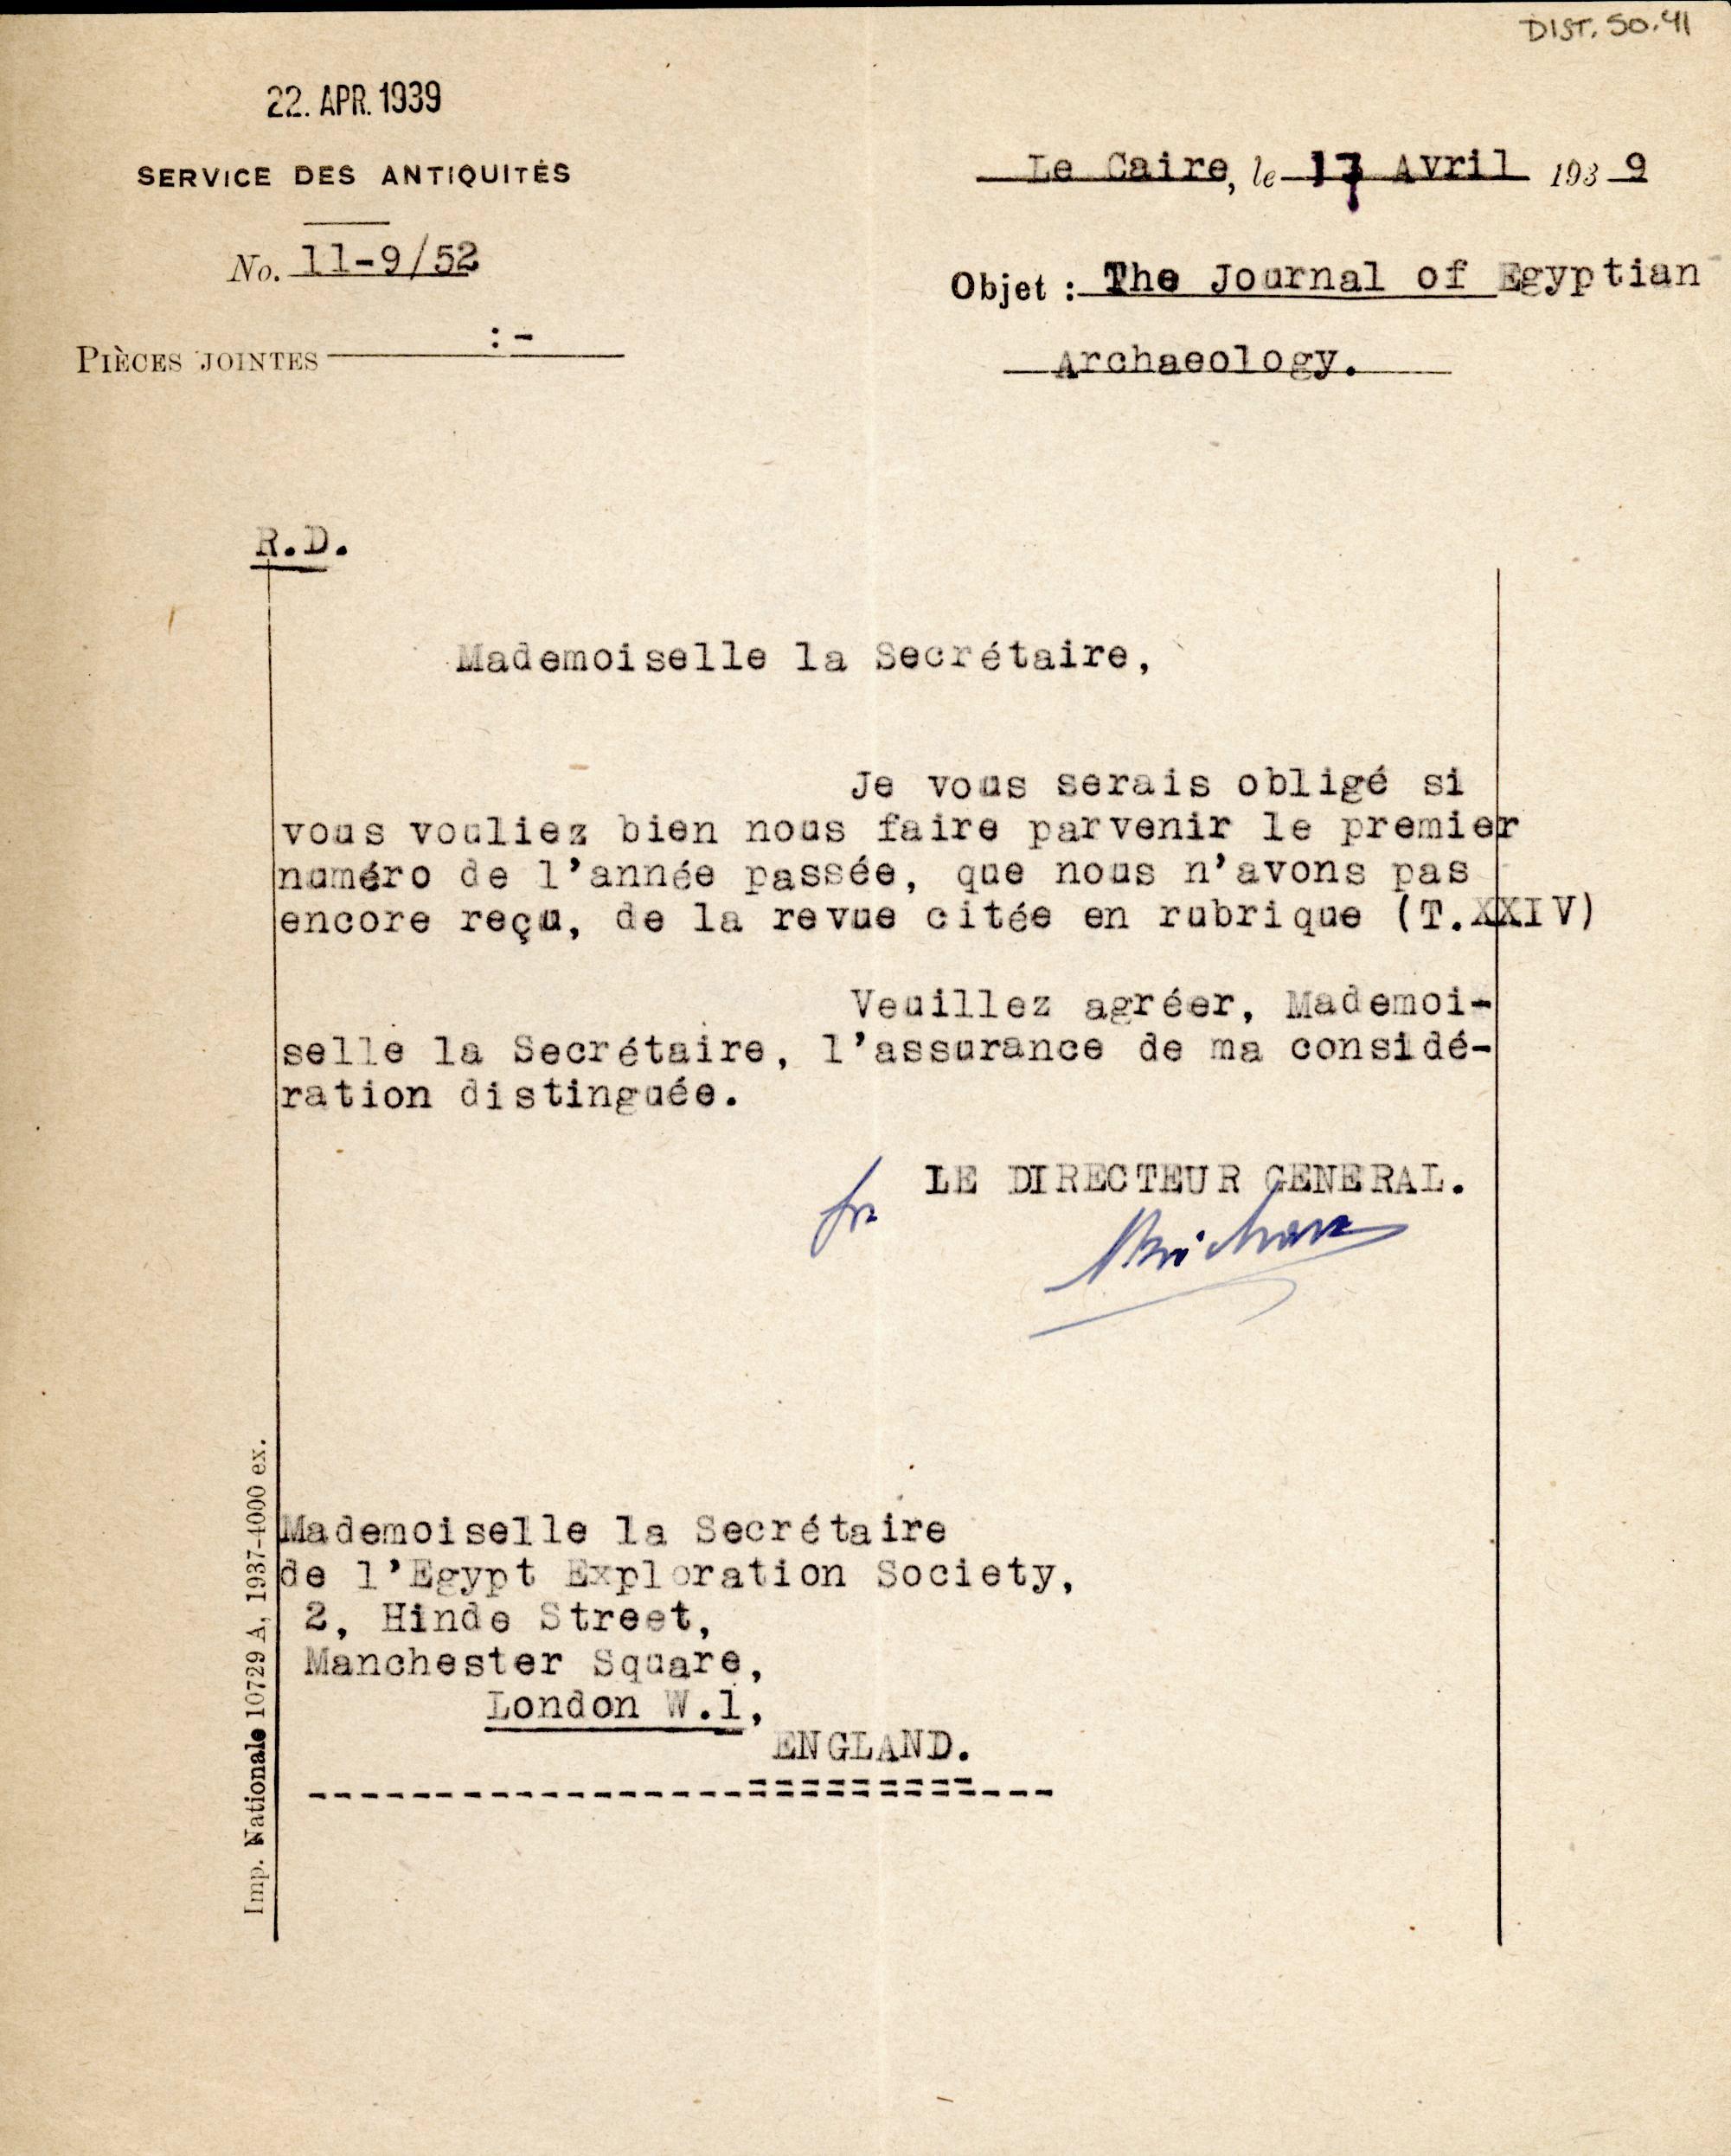 1926-39 correspondence with Antiquities Service DIST.50.41